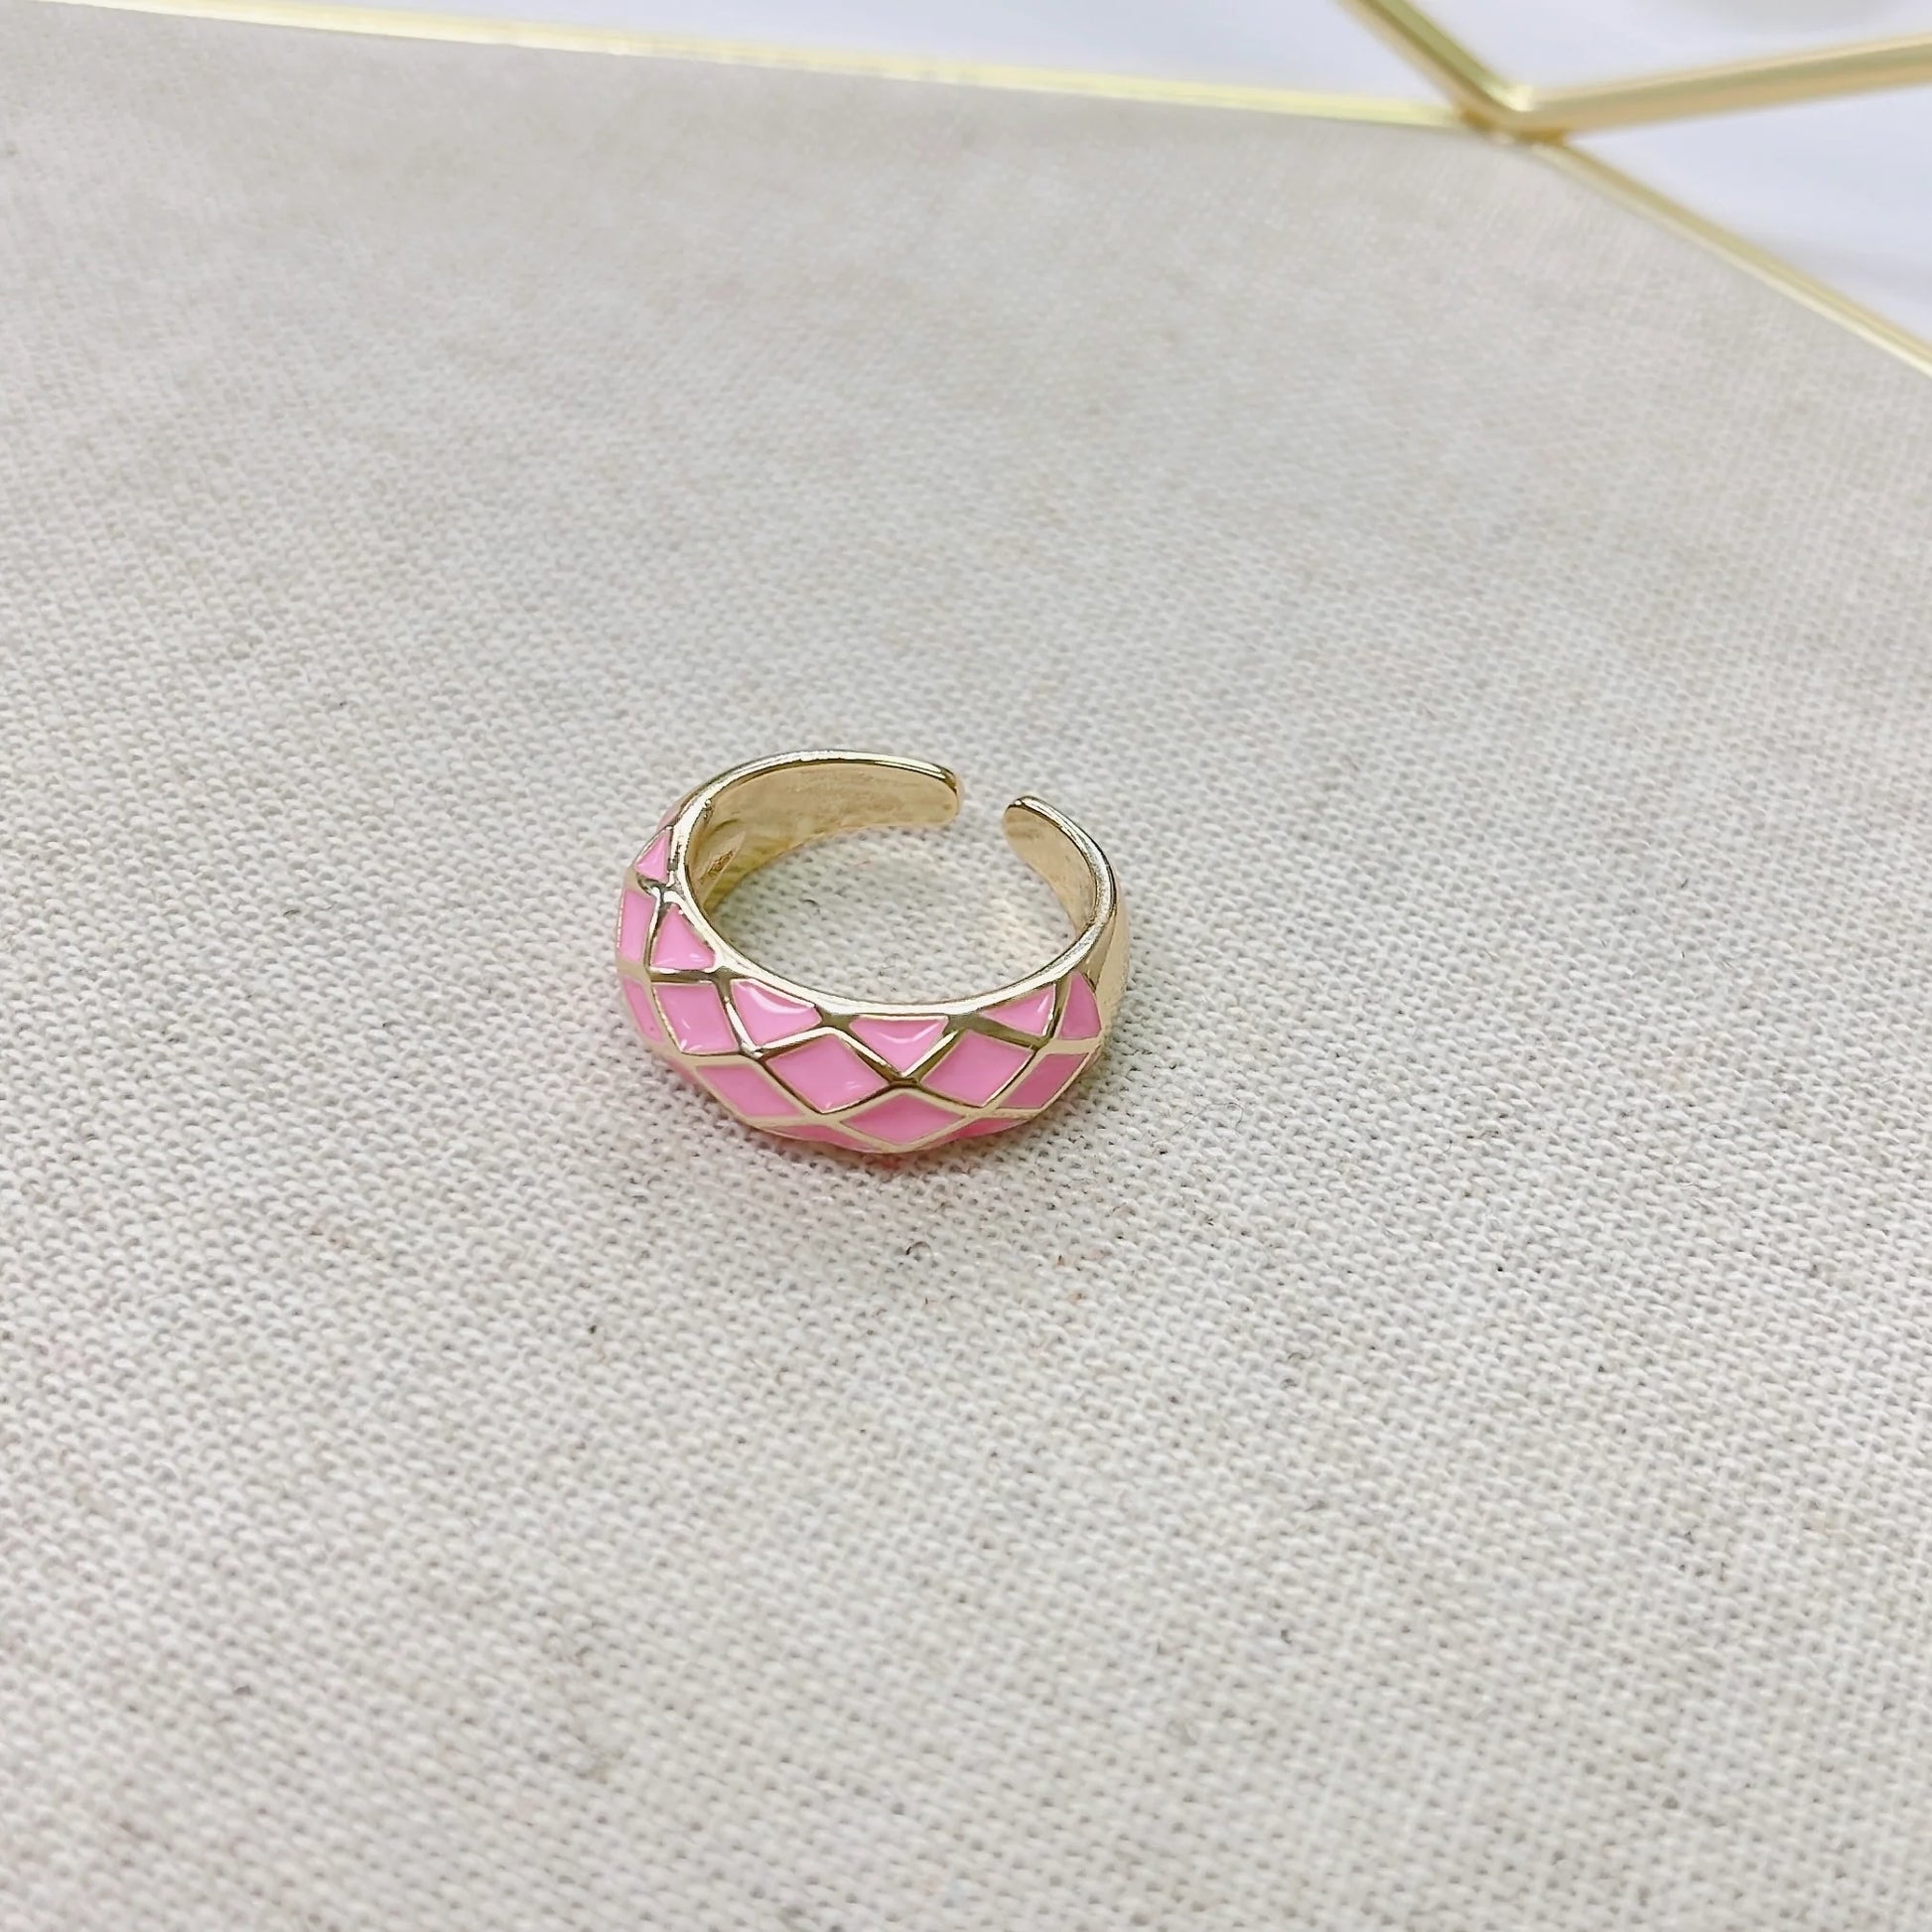 Diamond chevron design pink and gold ring.  Adjustable.